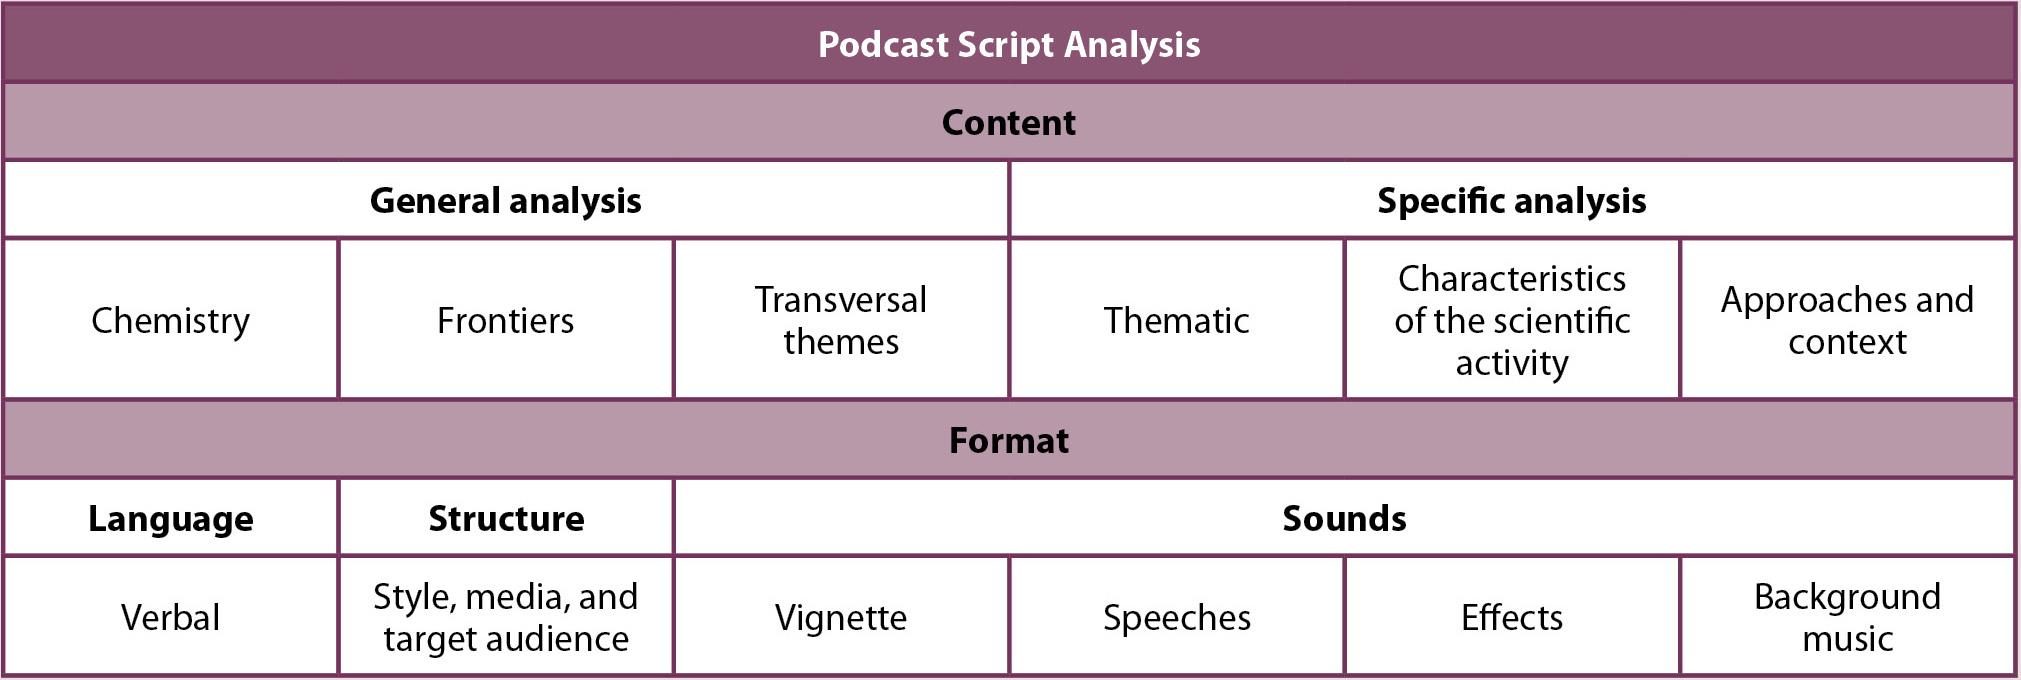 Figure 2 Podcast script analytical framework.